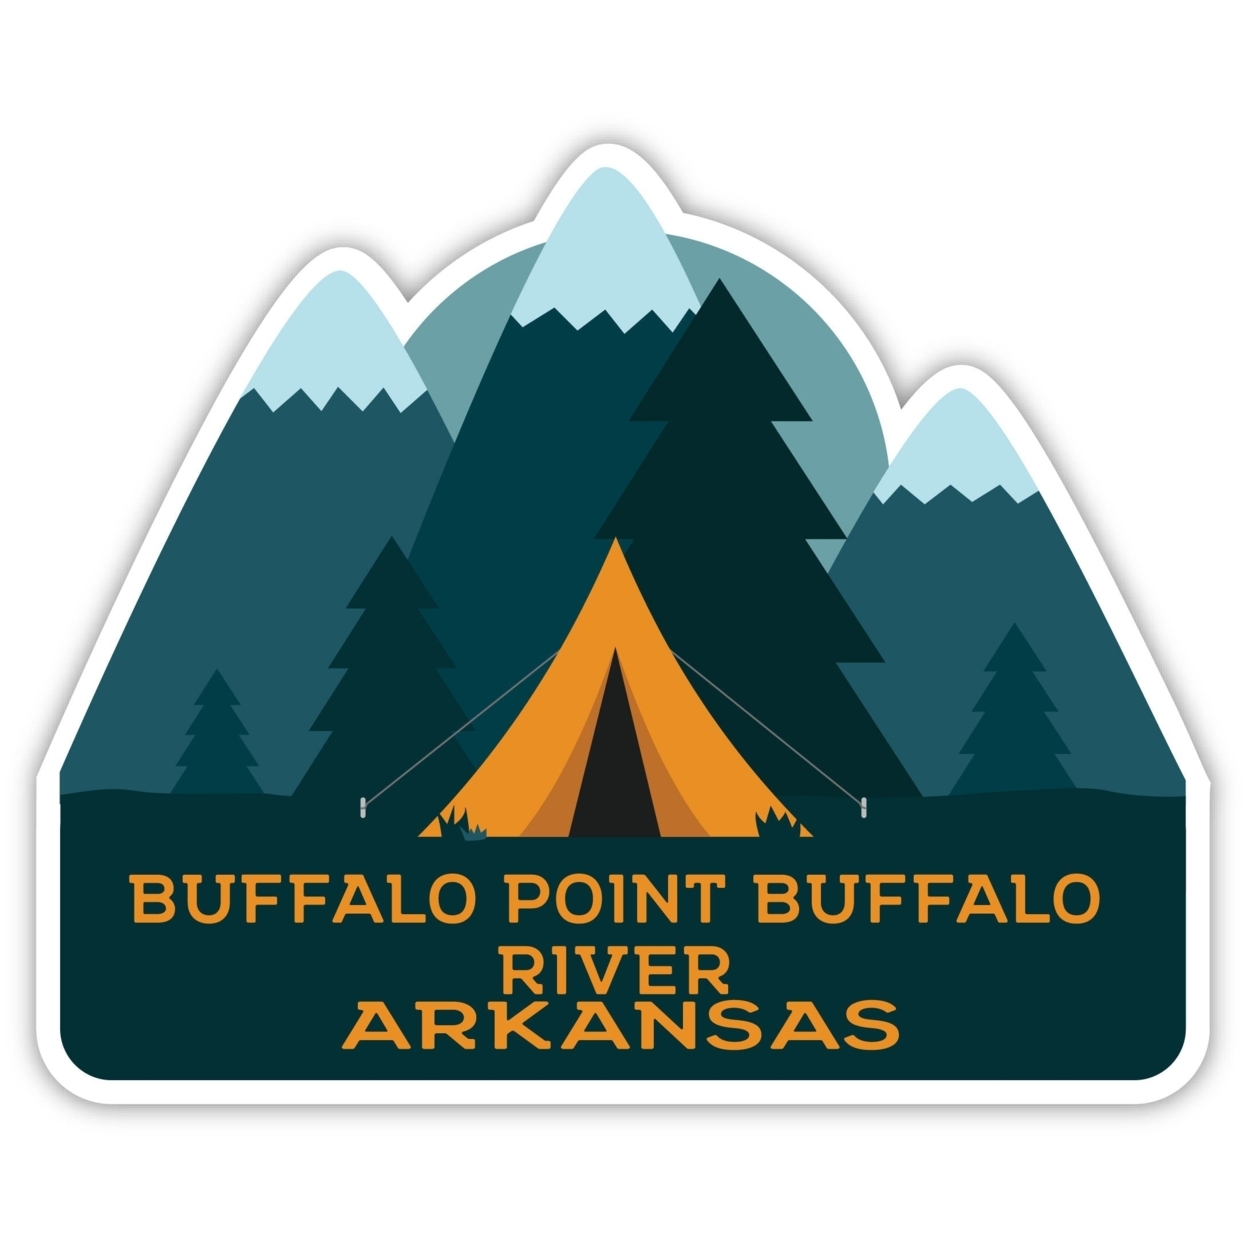 Buffalo Point Buffalo River Arkansas Souvenir Decorative Stickers (Choose Theme And Size) - 4-Pack, 2-Inch, Camp Life